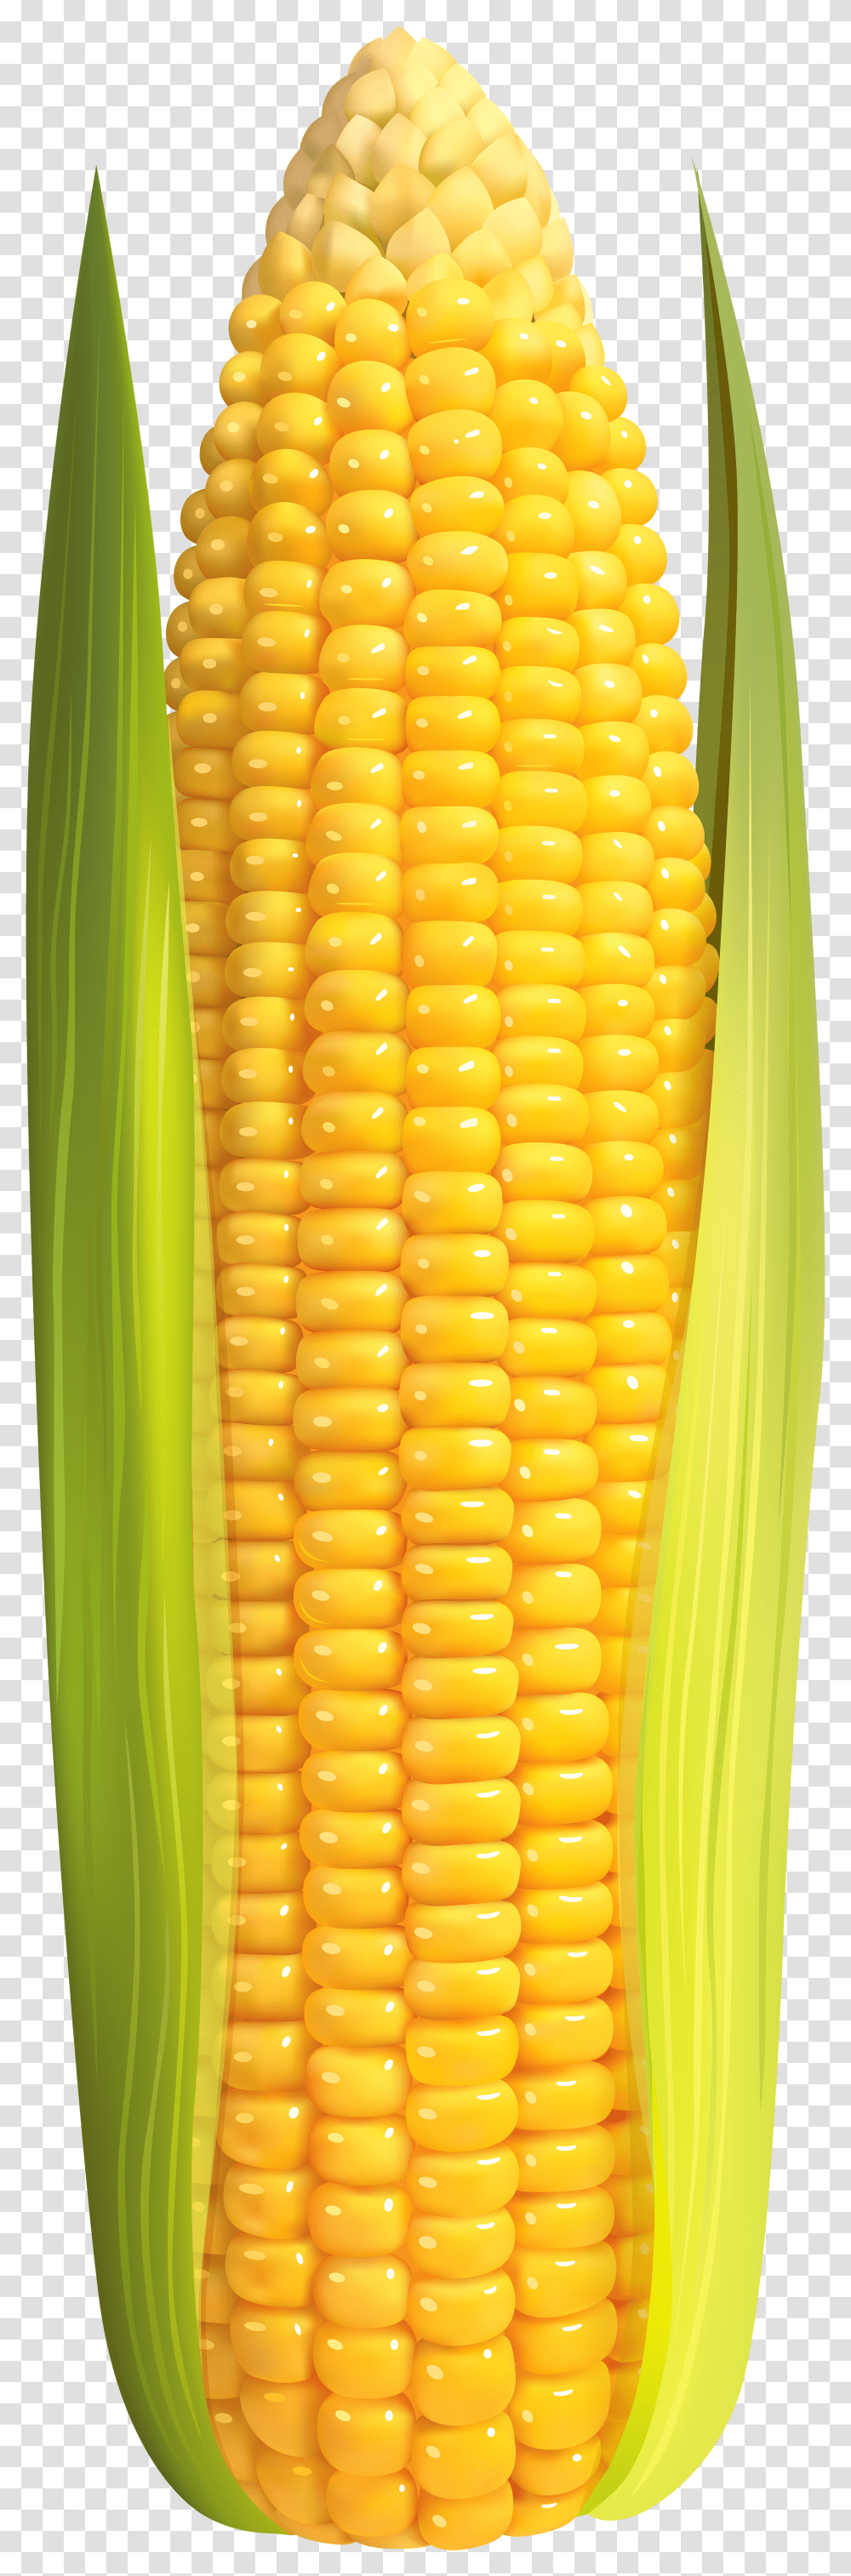 Corn Clip Art High Resolution Corn On The Cob Transparent Png